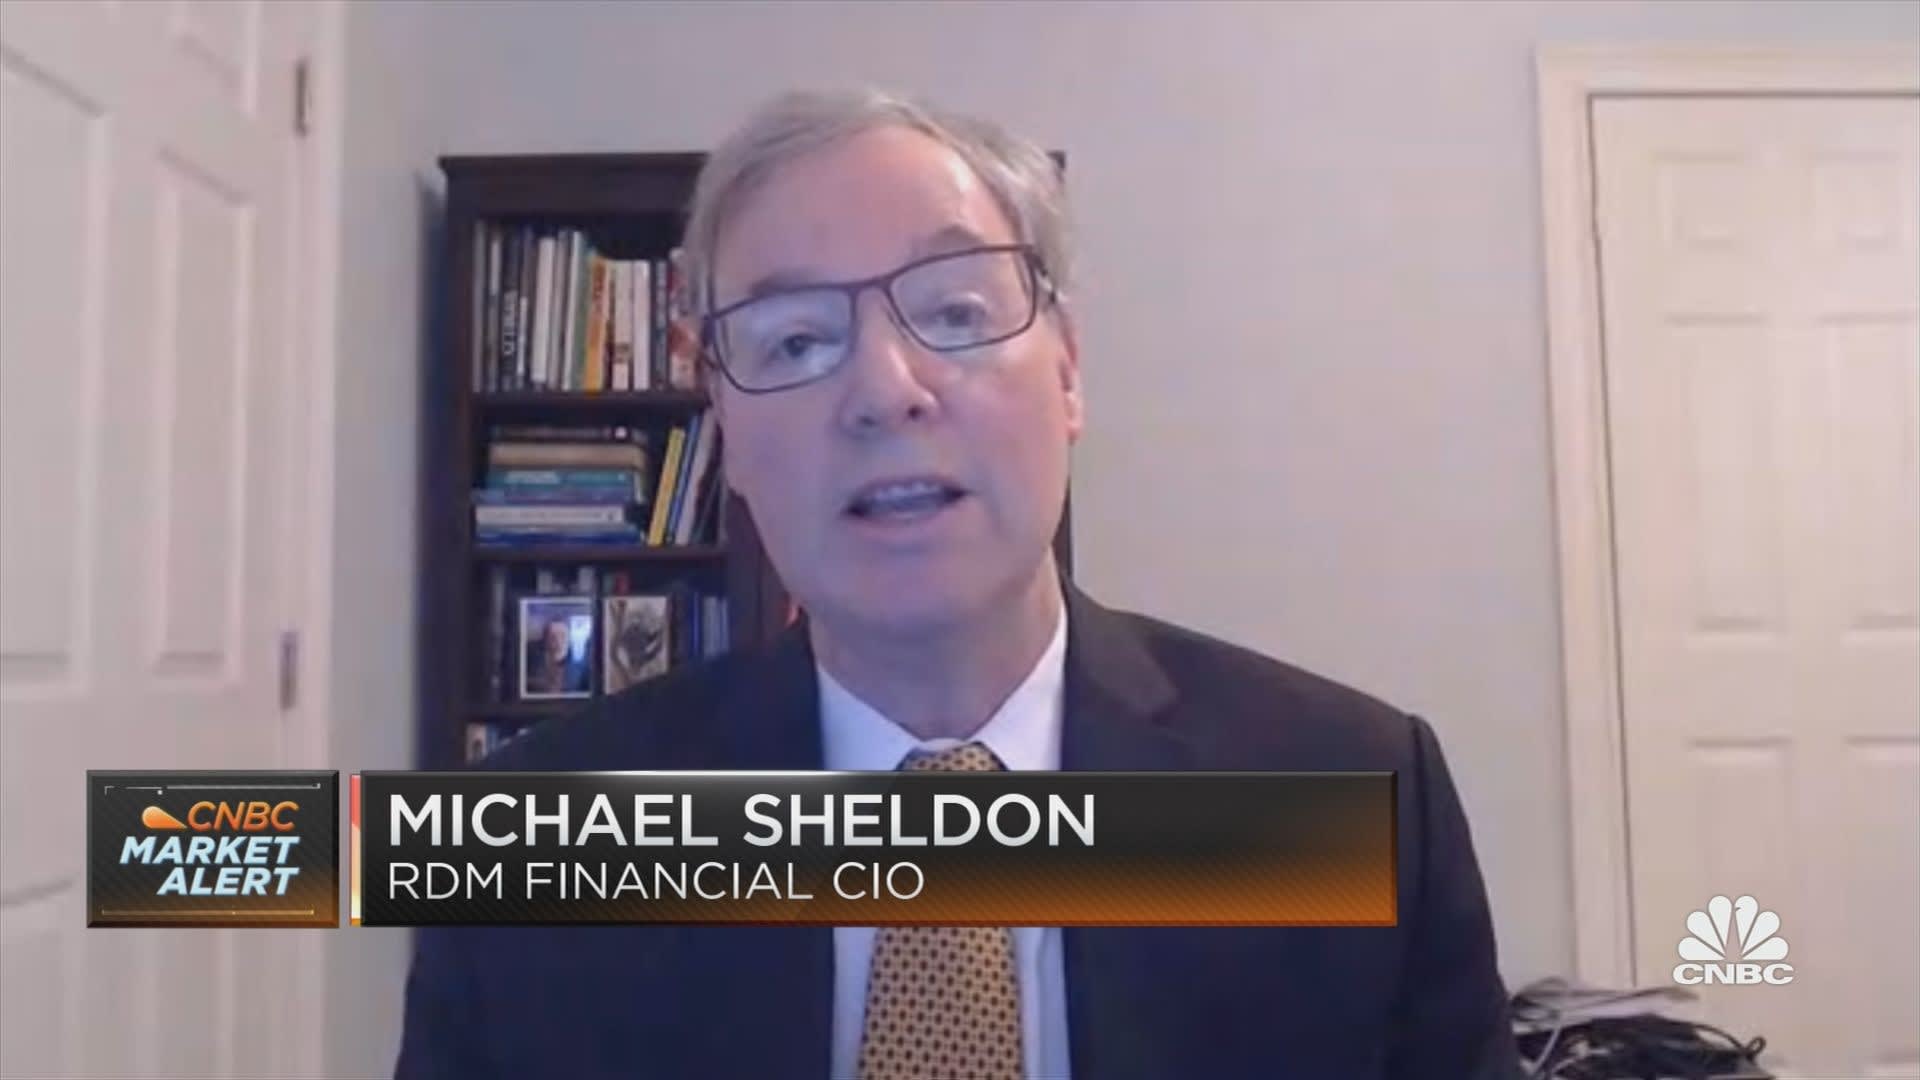 RDM Financial’s Michael Sheldon on market sentiment